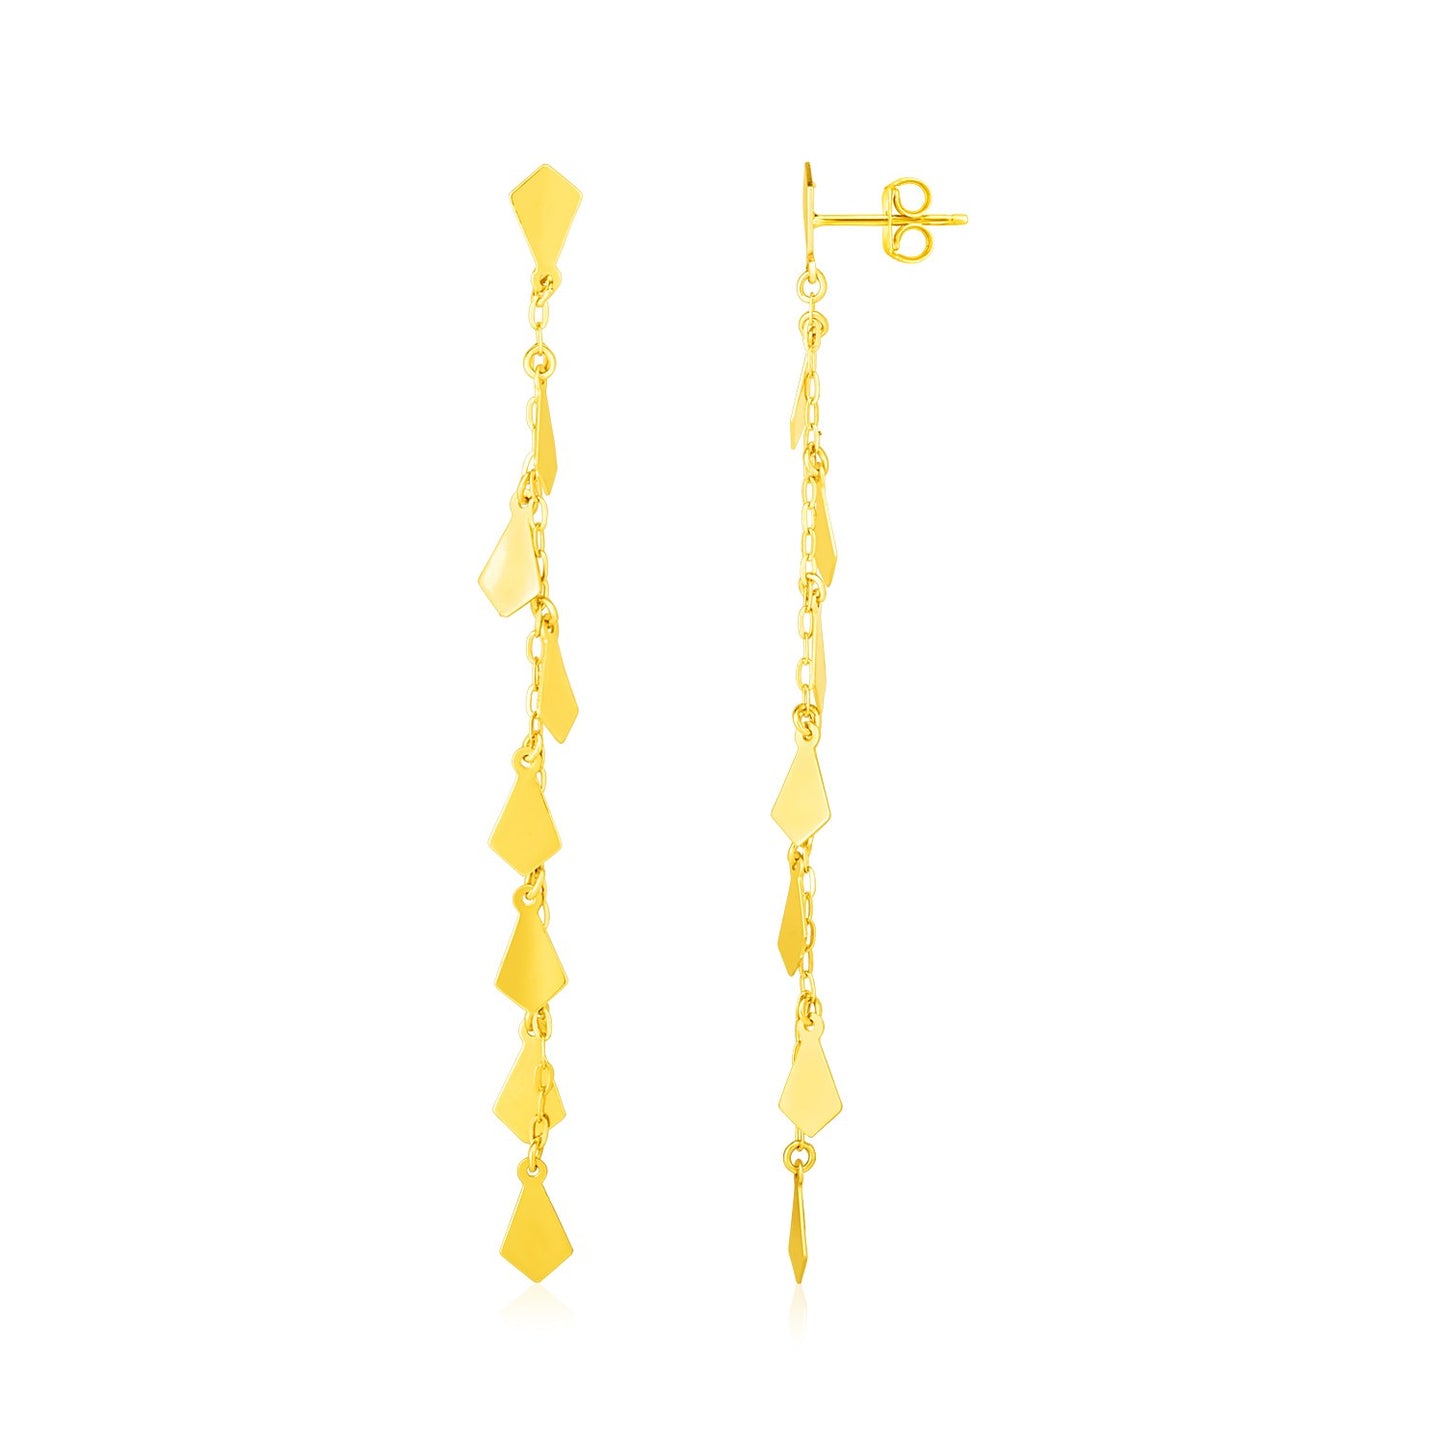 Polished Dangle Earrings in 14K Yellow Gold